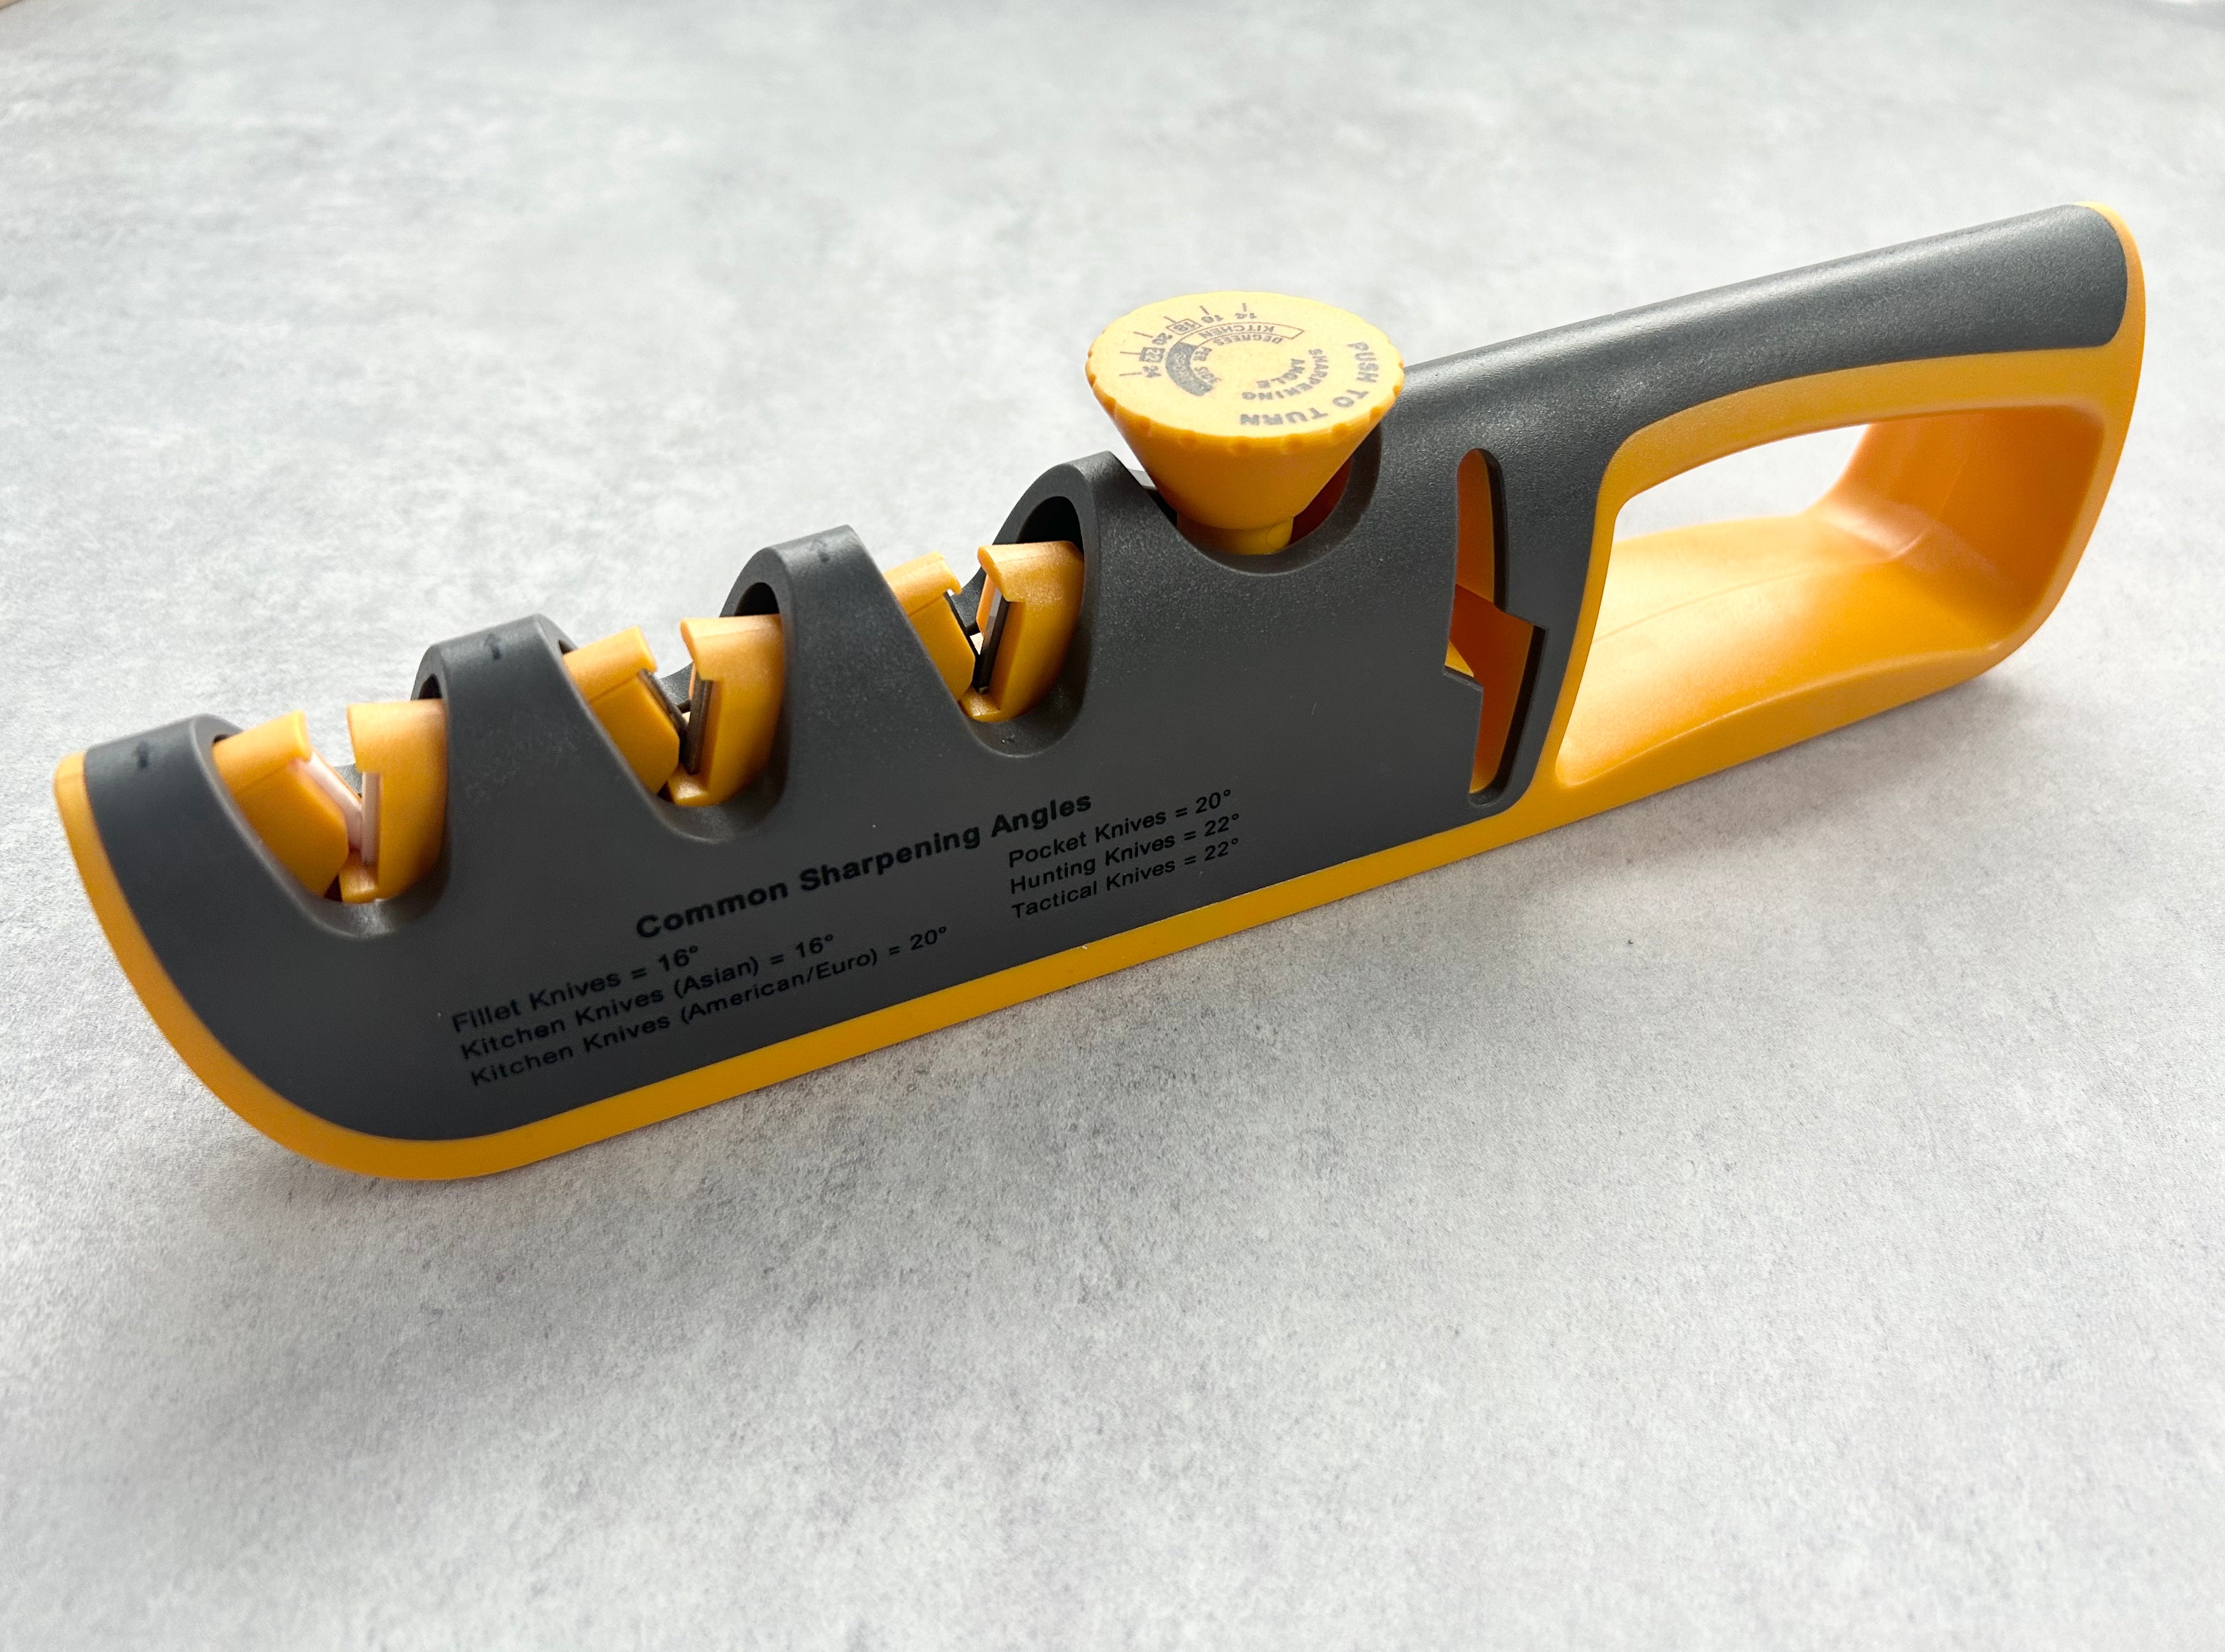 PRO EDGE+ Angle Adjustable Knife Sharpener, Designed by Raythesharpener